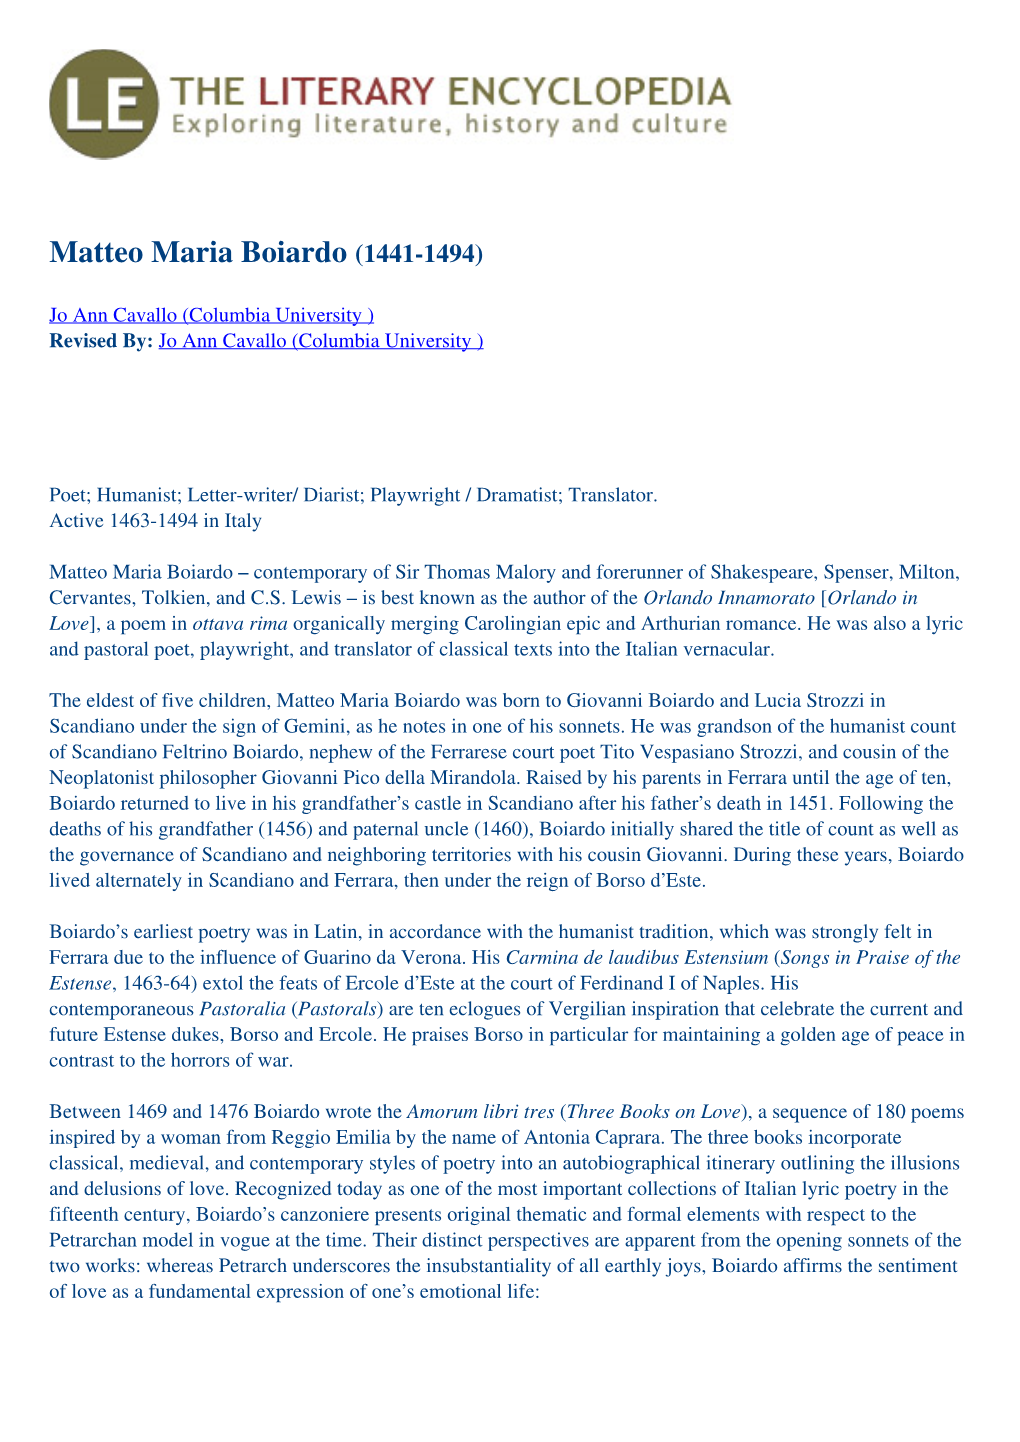 Matteo Maria Boiardo (1441-1494)